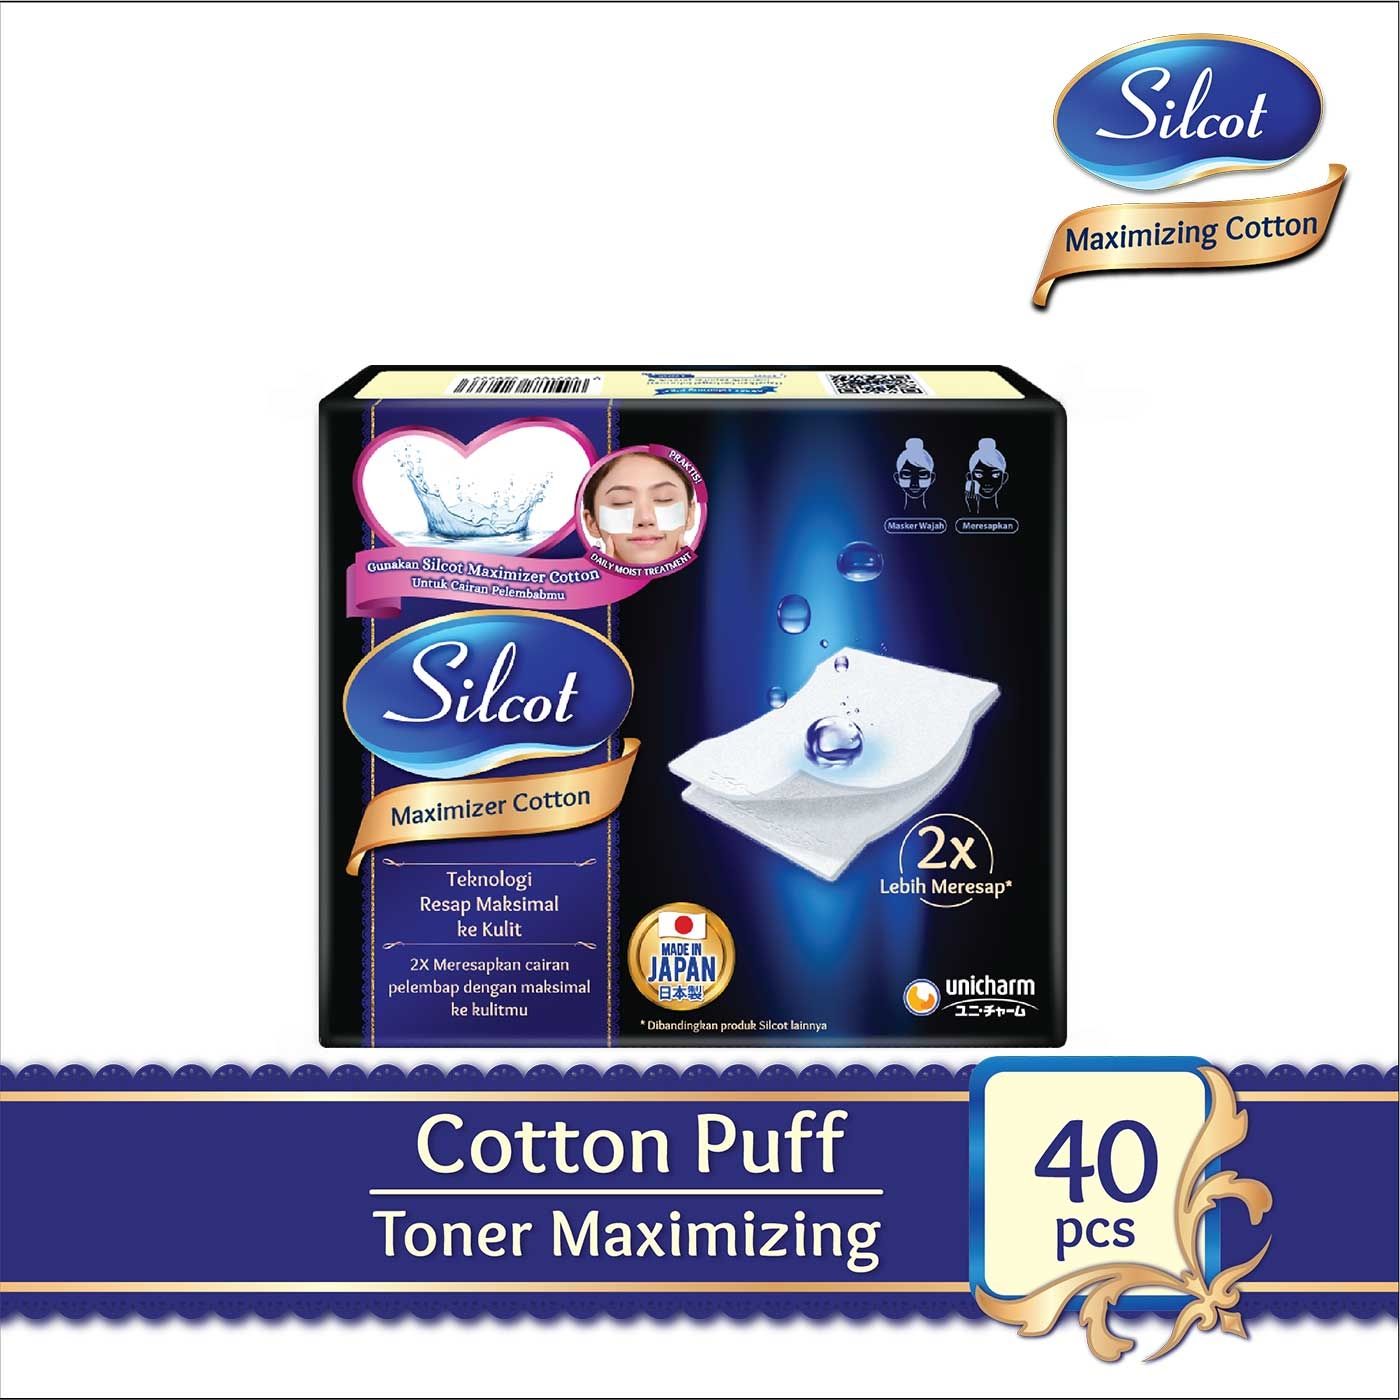 Silcot Maximizer Cotton - 1